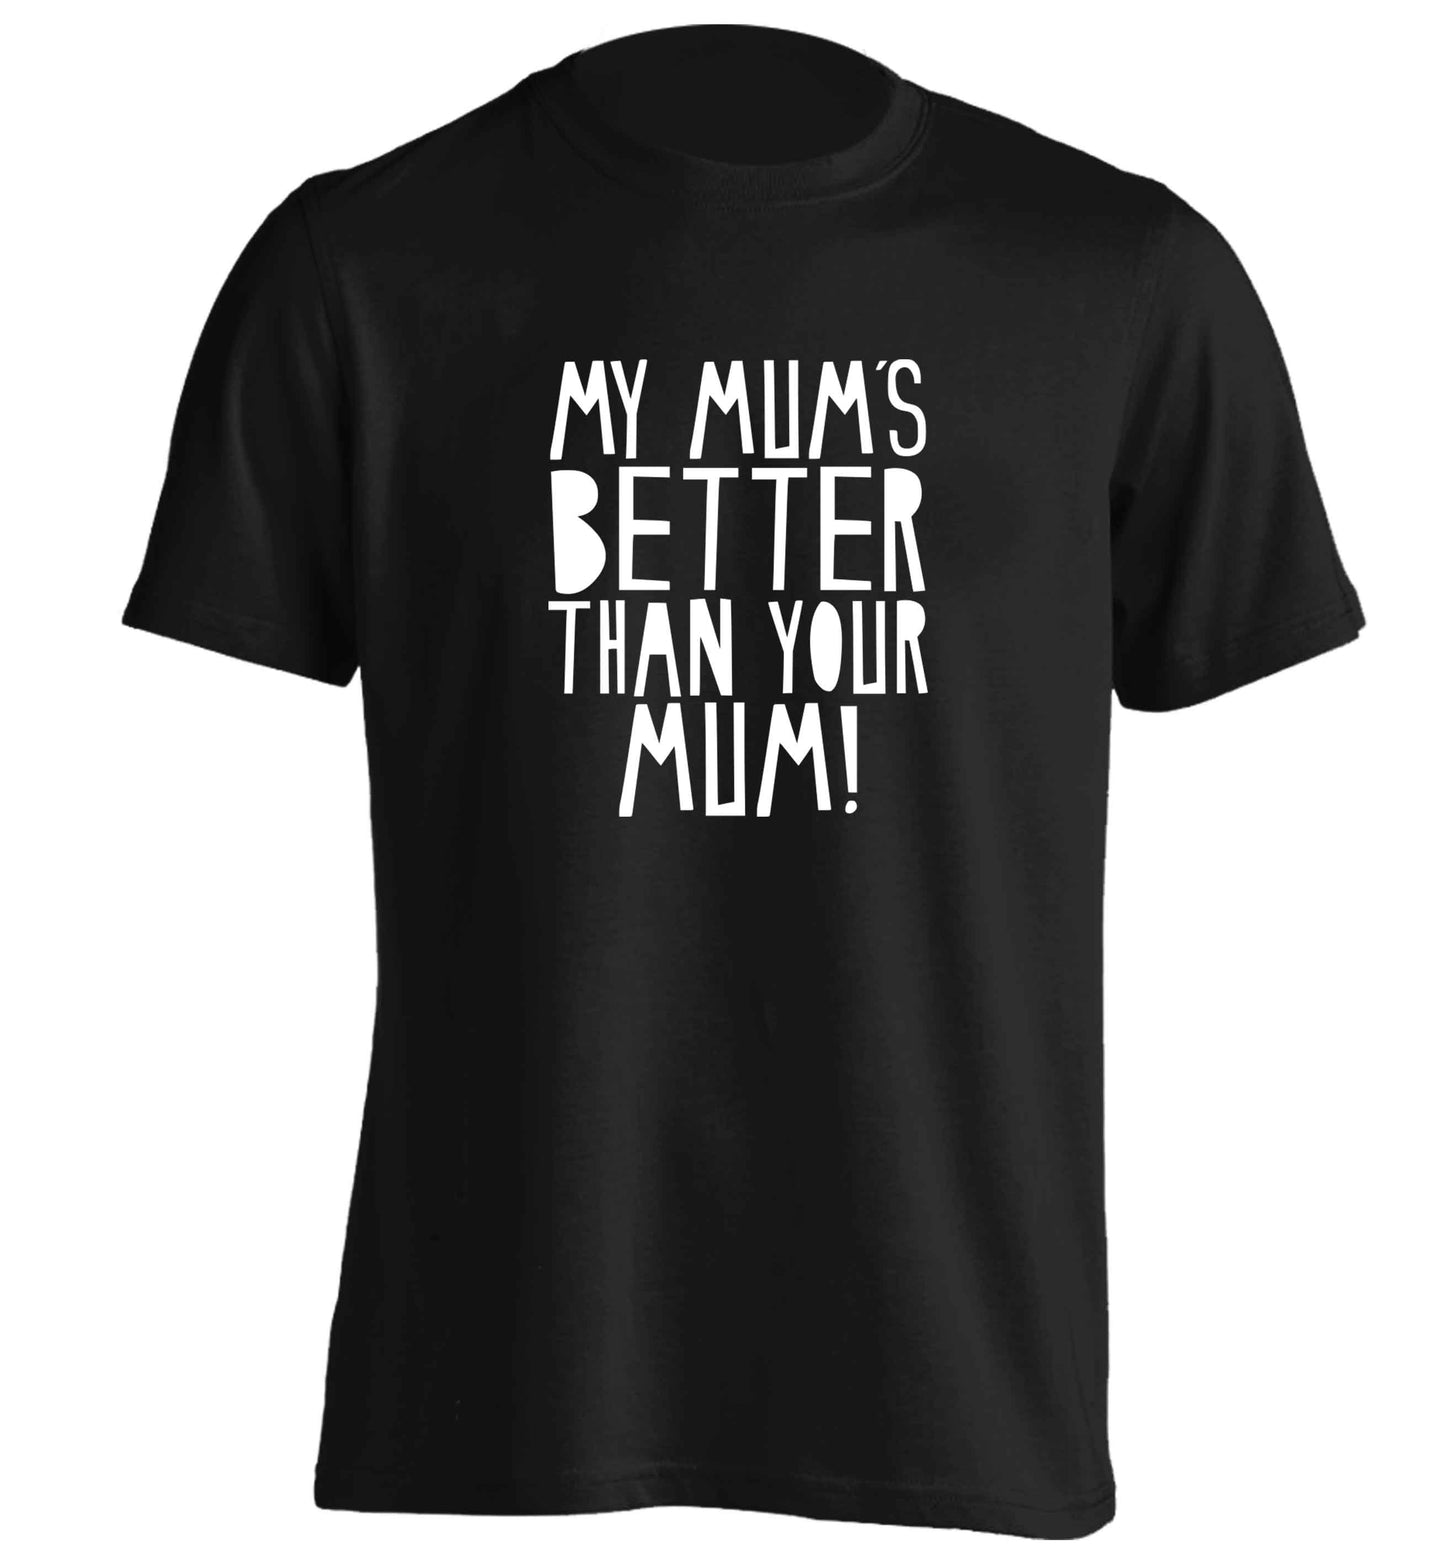 My mum's better than your mum adults unisex black Tshirt 2XL